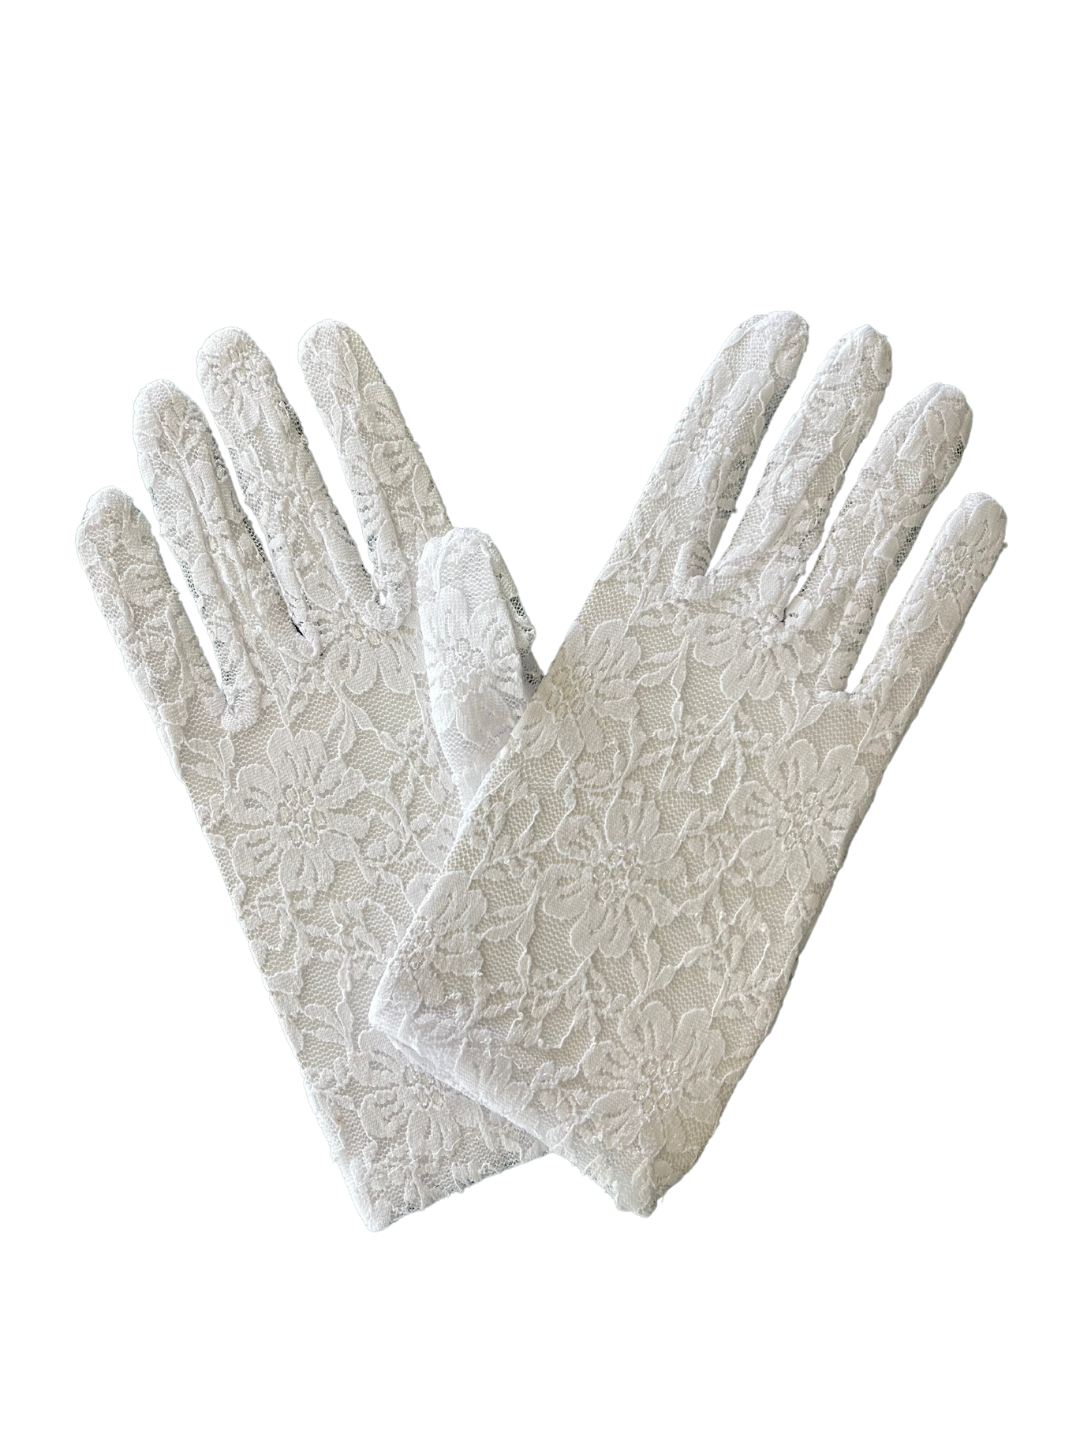 Wrist Lace Gloves - White